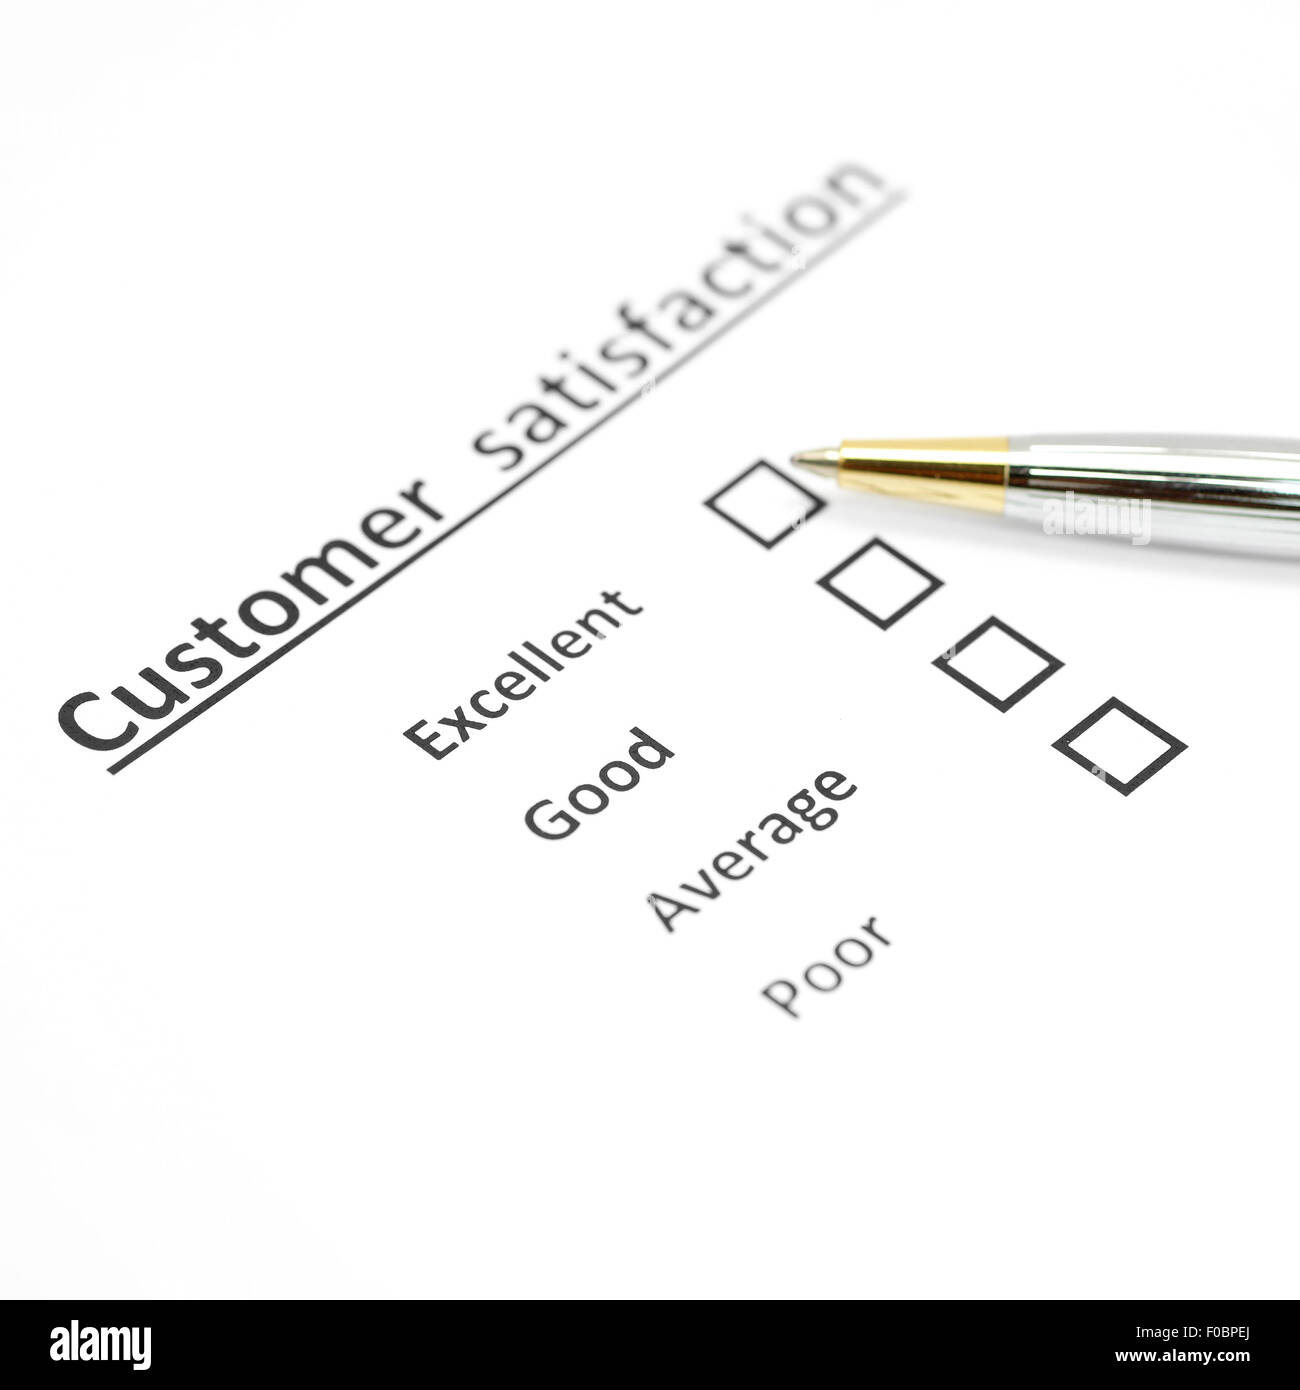 Contoh Questionnaire Customer Satisfaction Contoh Opa - vrogue.co